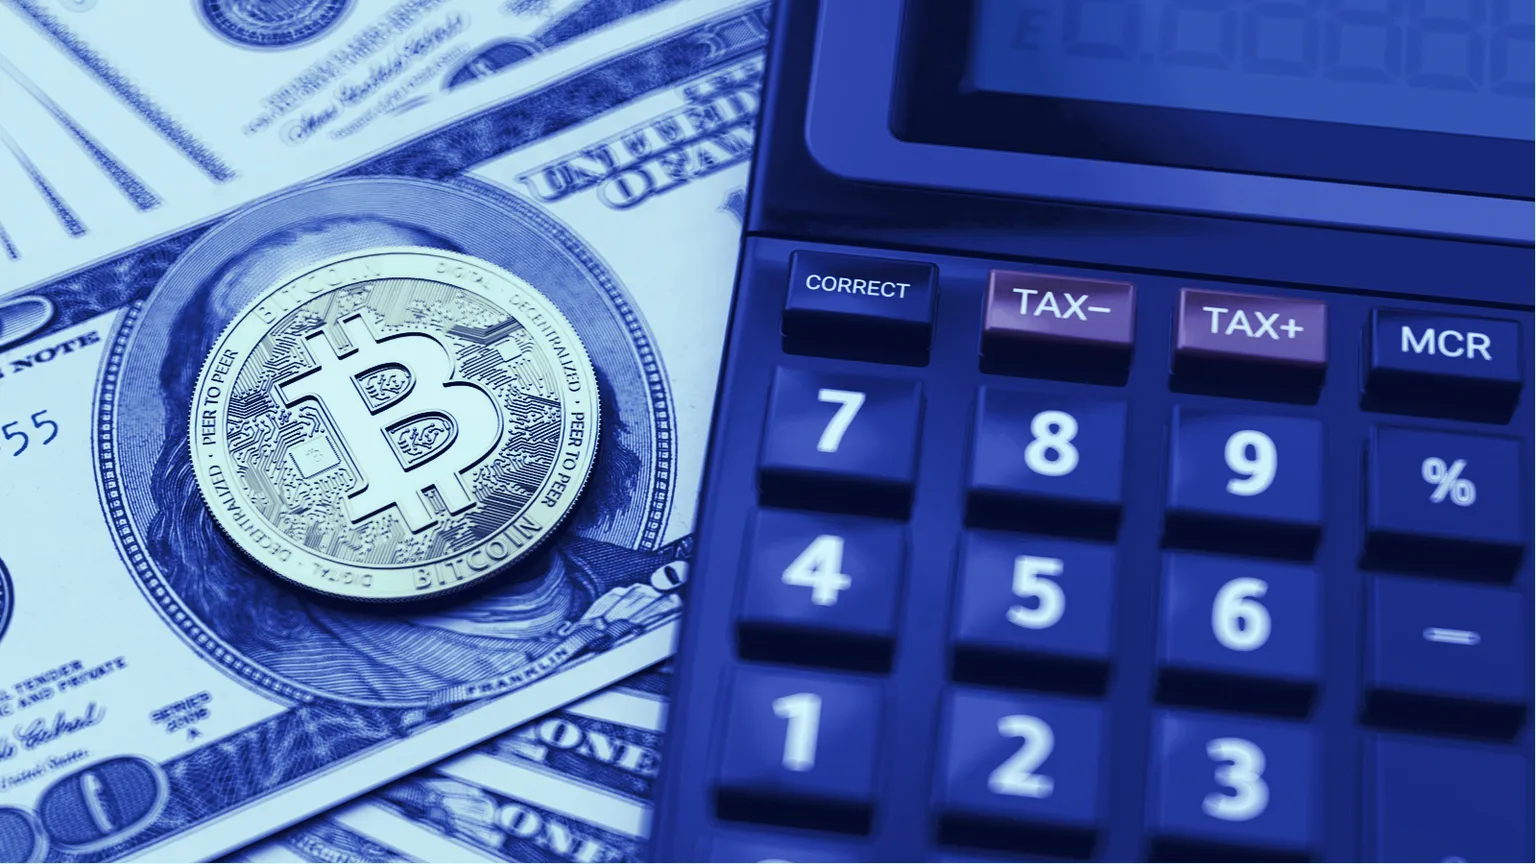 Bitcoin tax ain't so easy. Image: Shutterstock